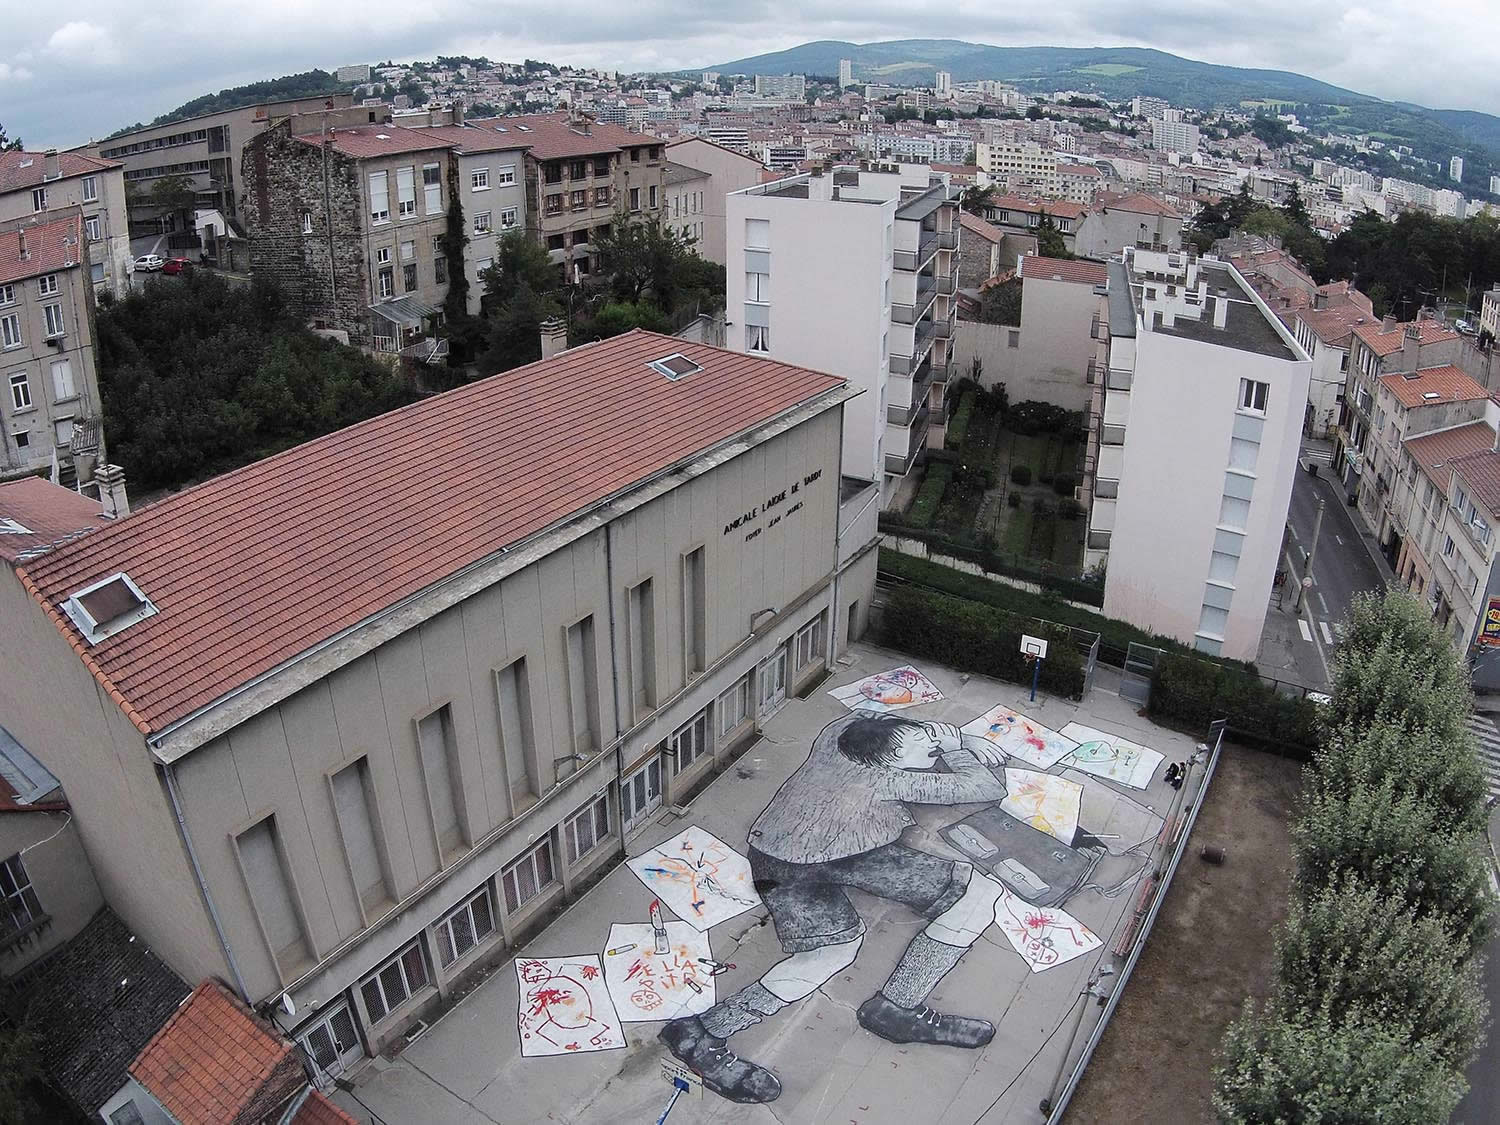 man playing cards, rooftop graffiti